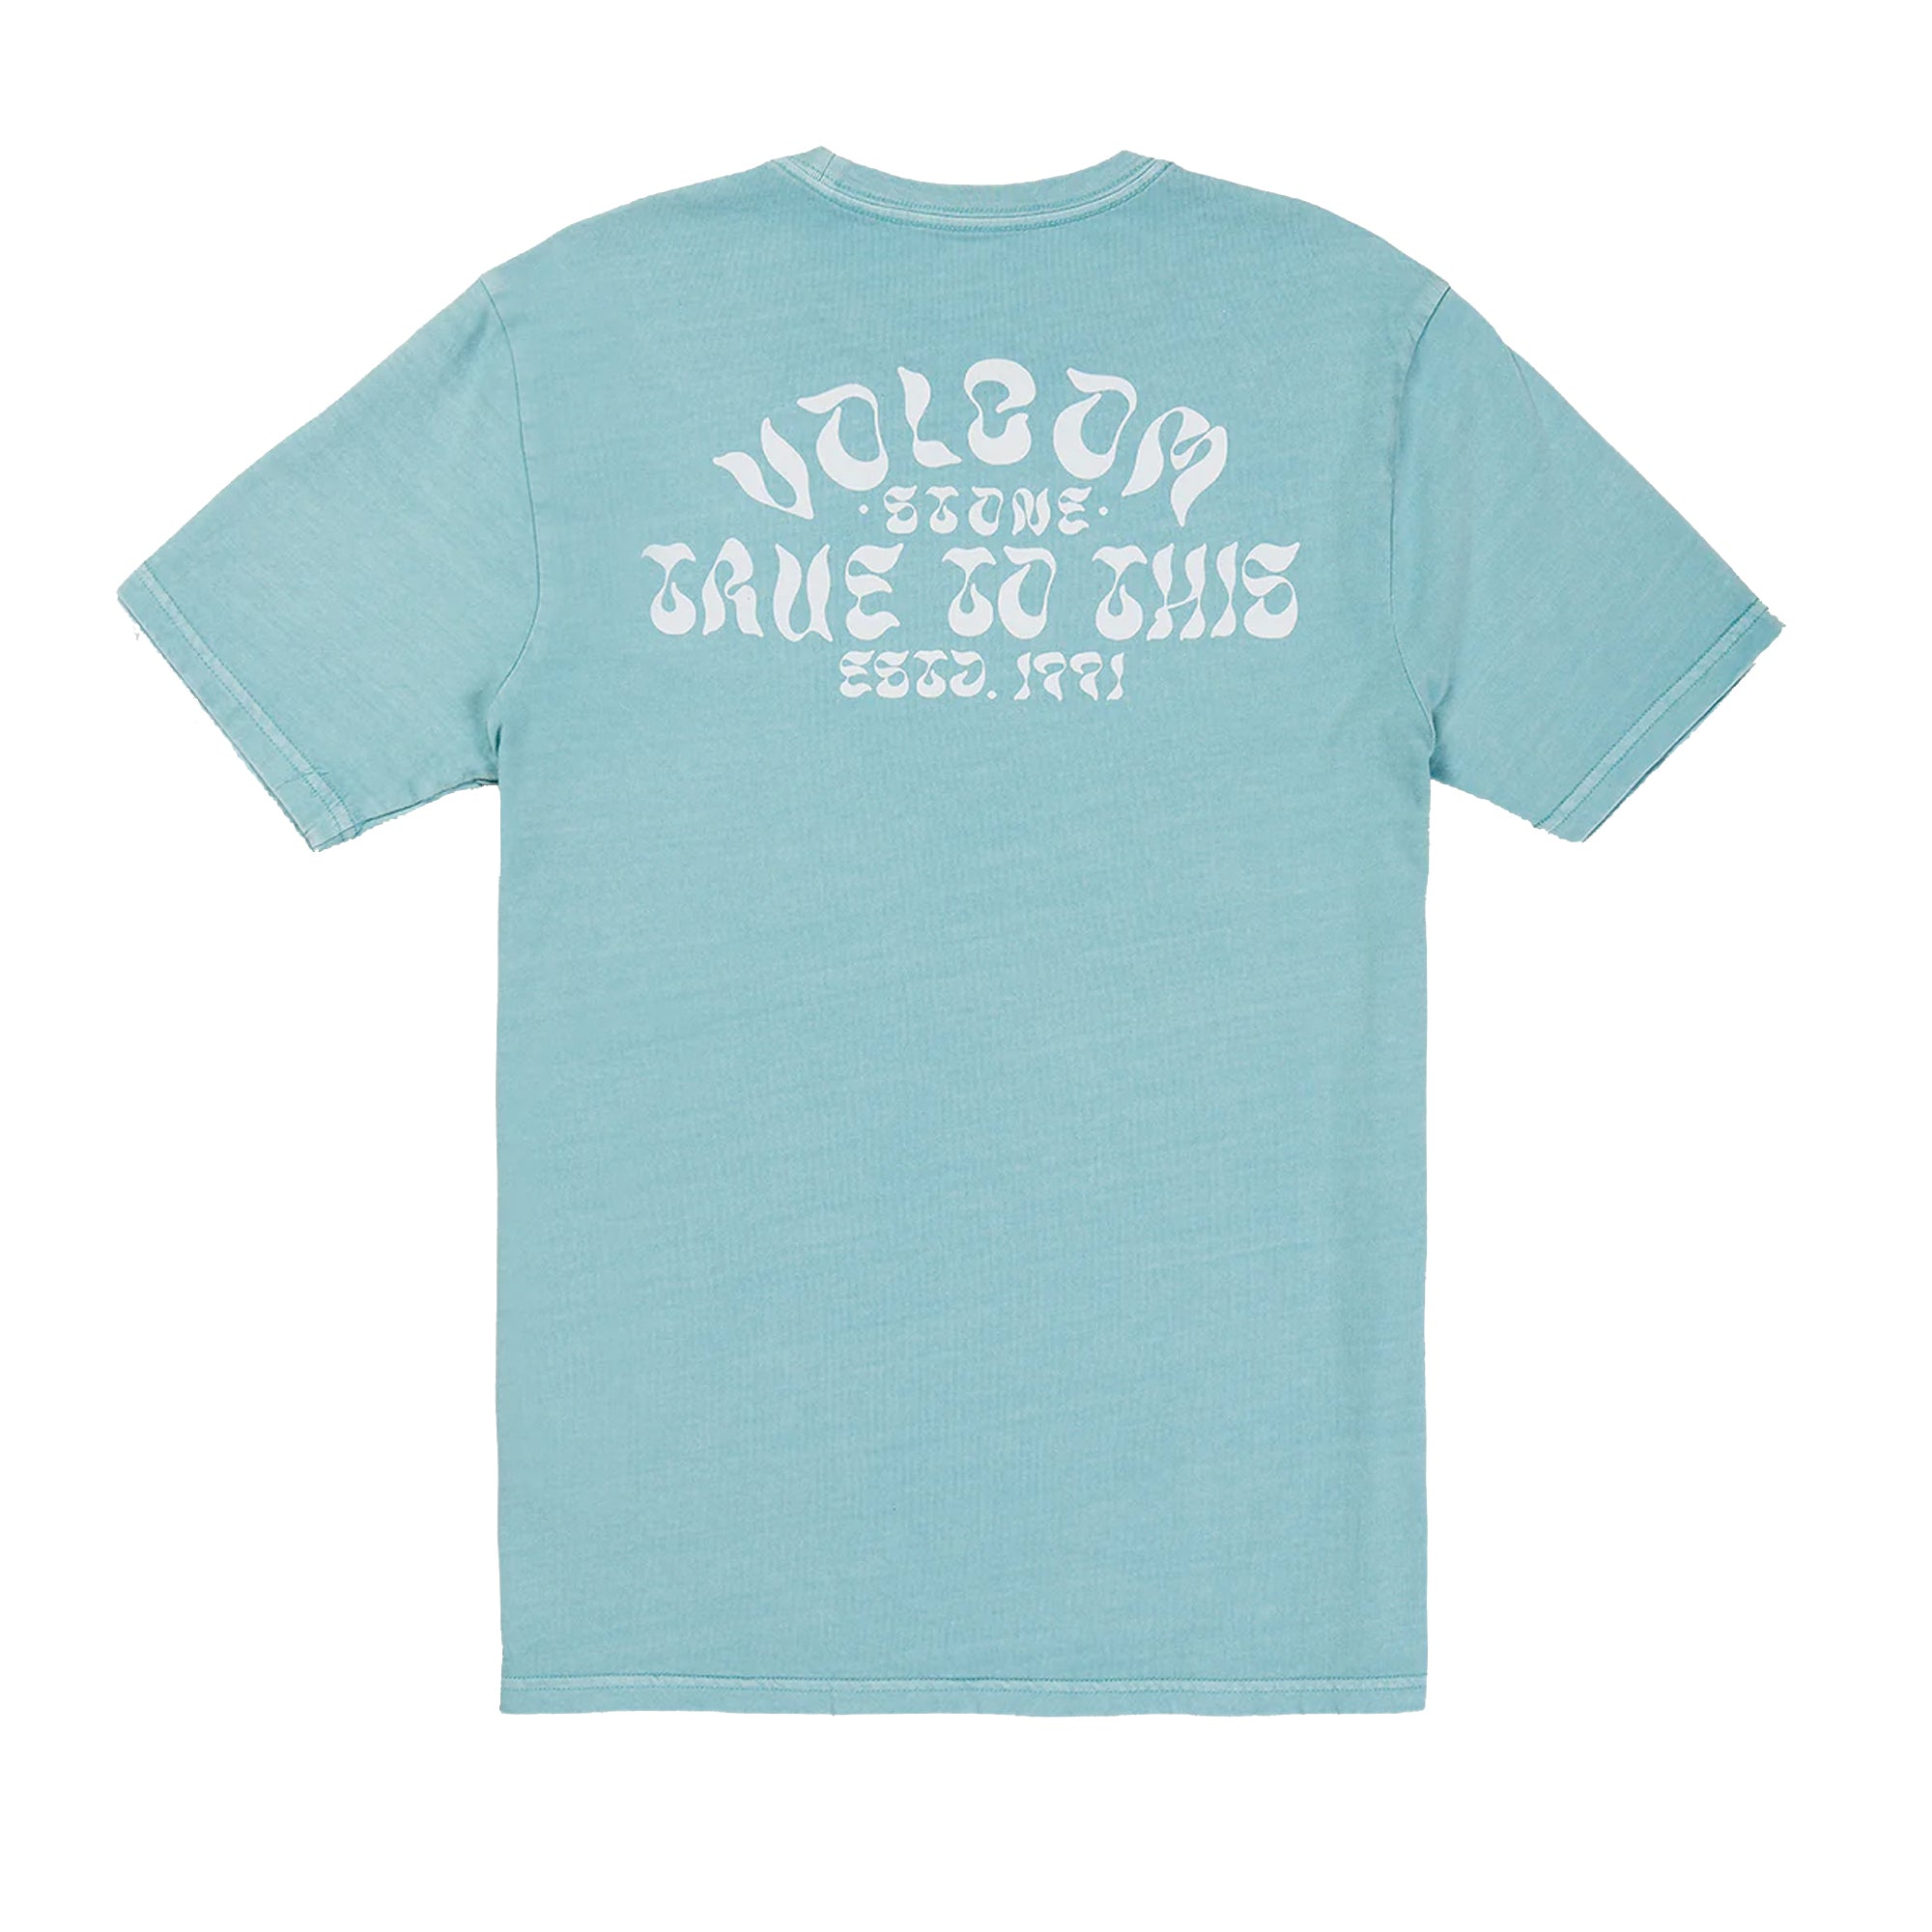 Volcom Venice Men's S/S T-Shirt